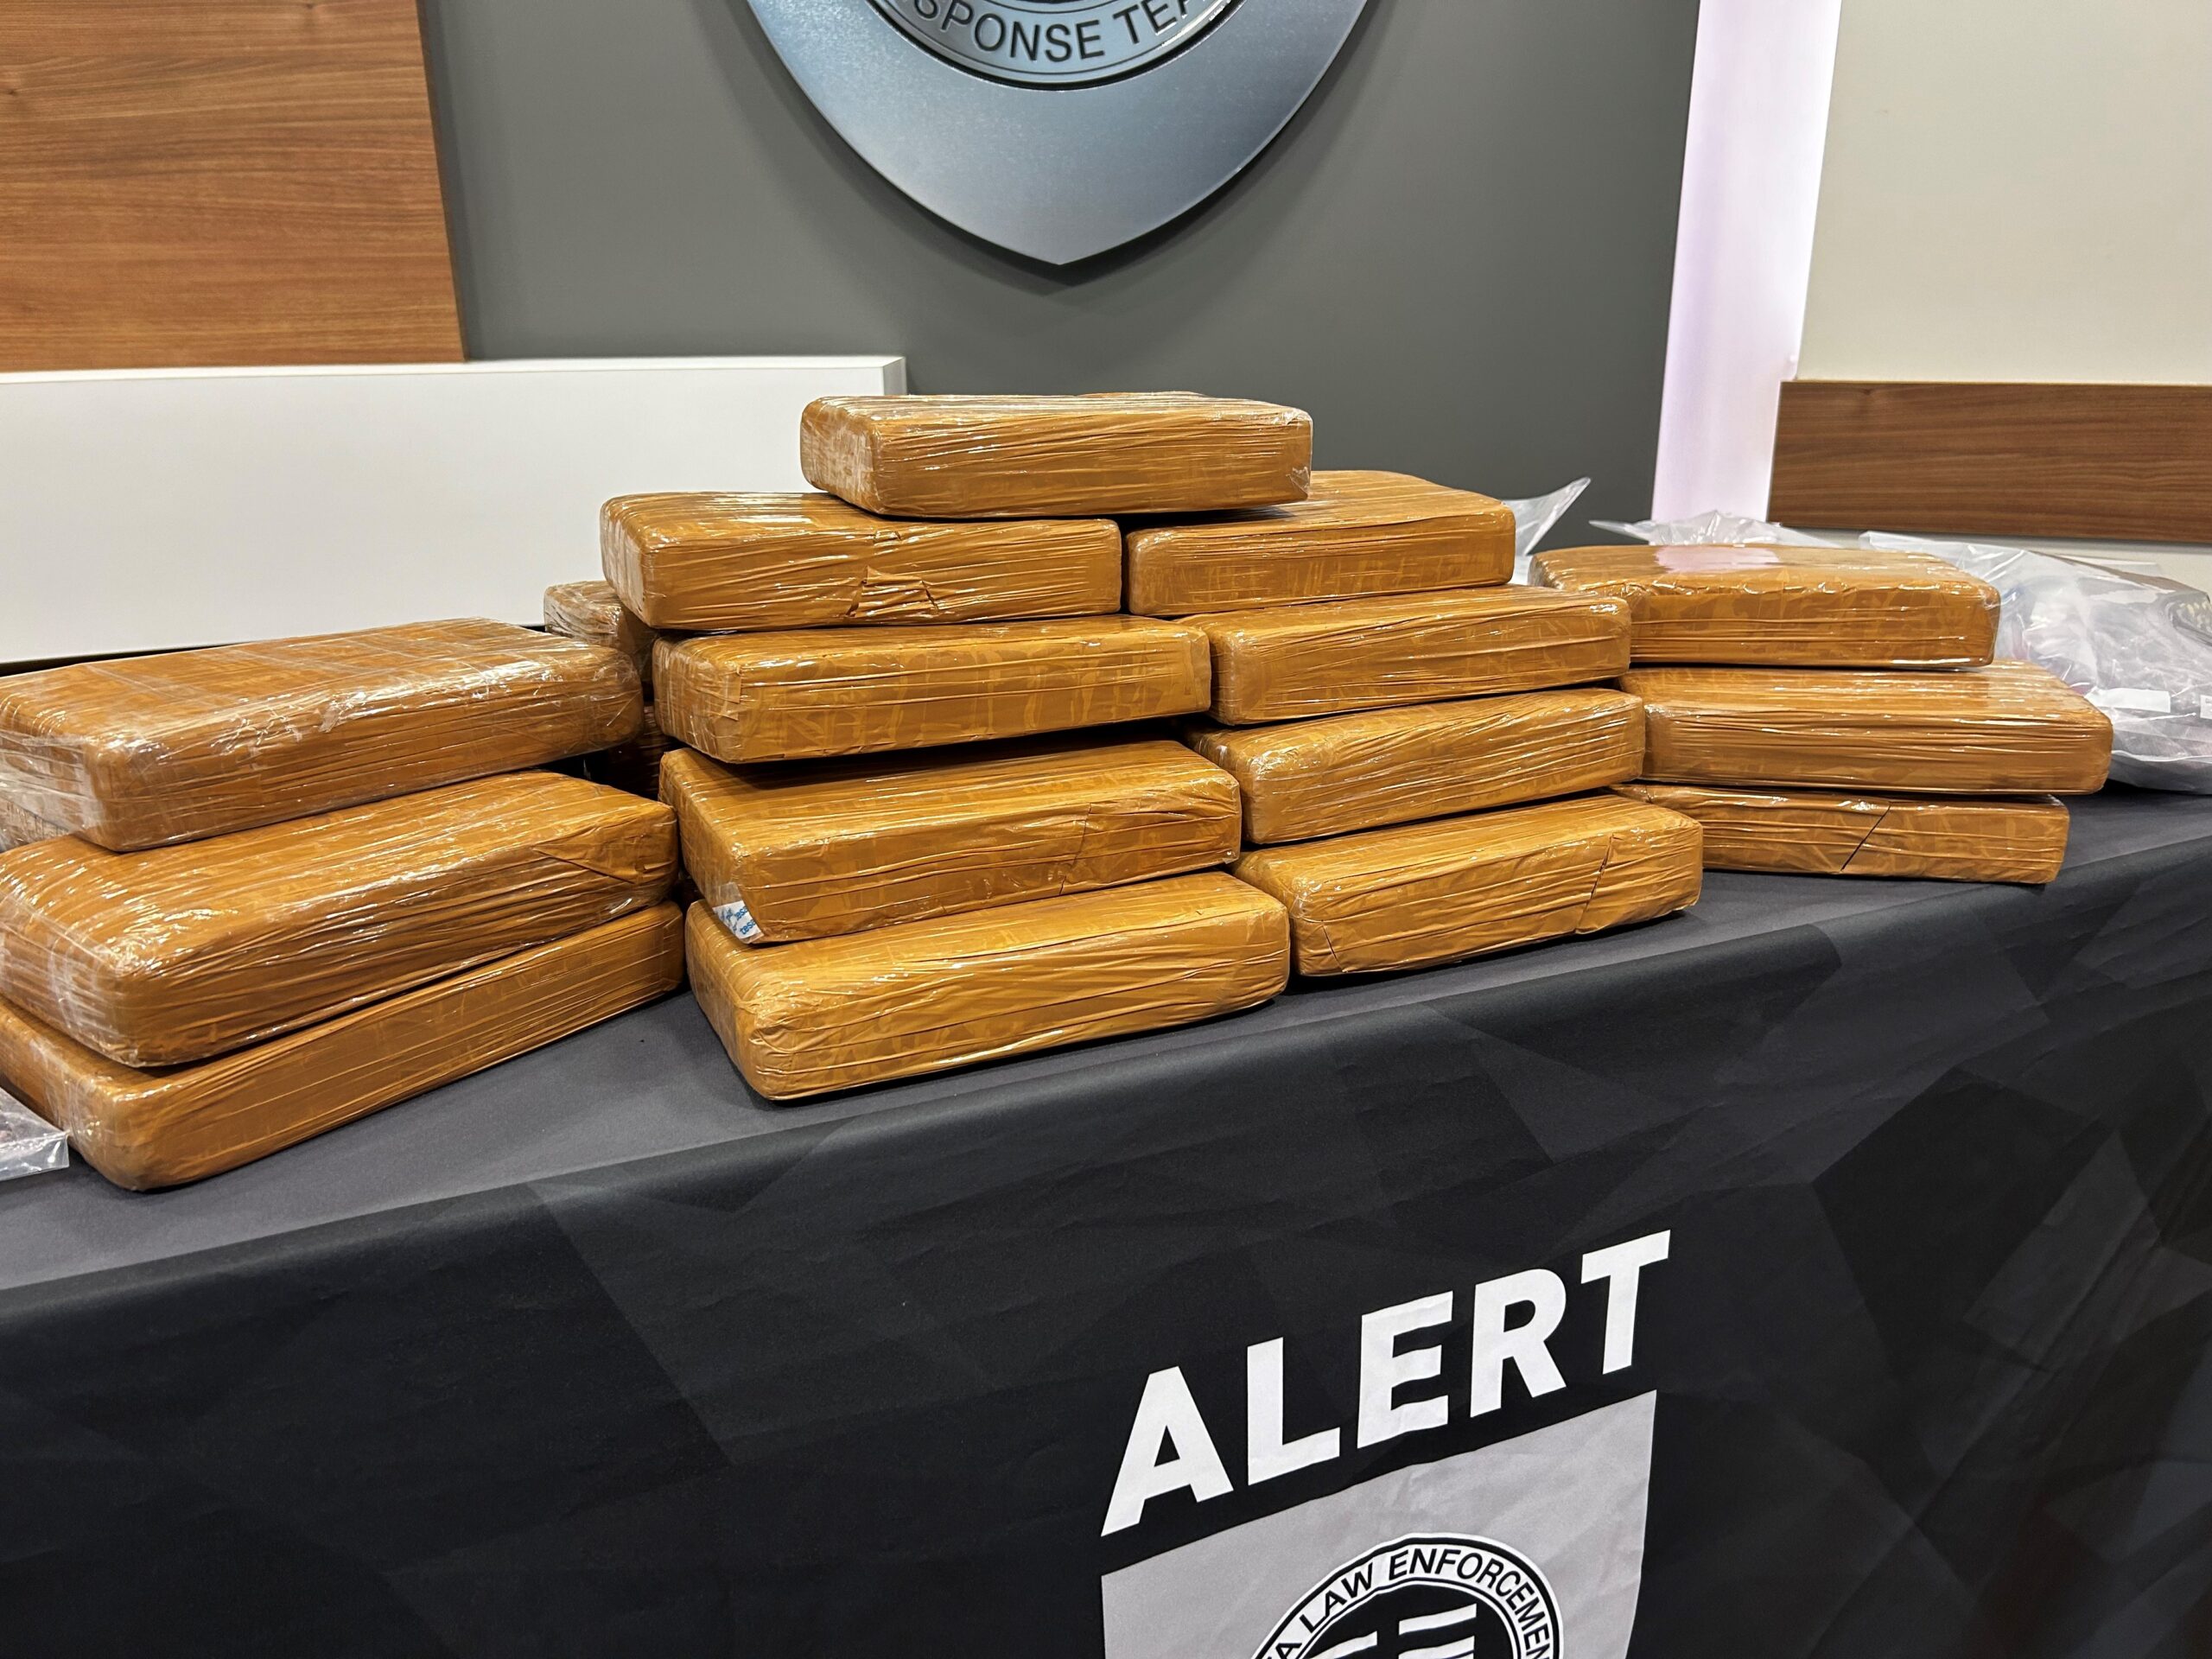 Major cocaine seizure in Edmonton